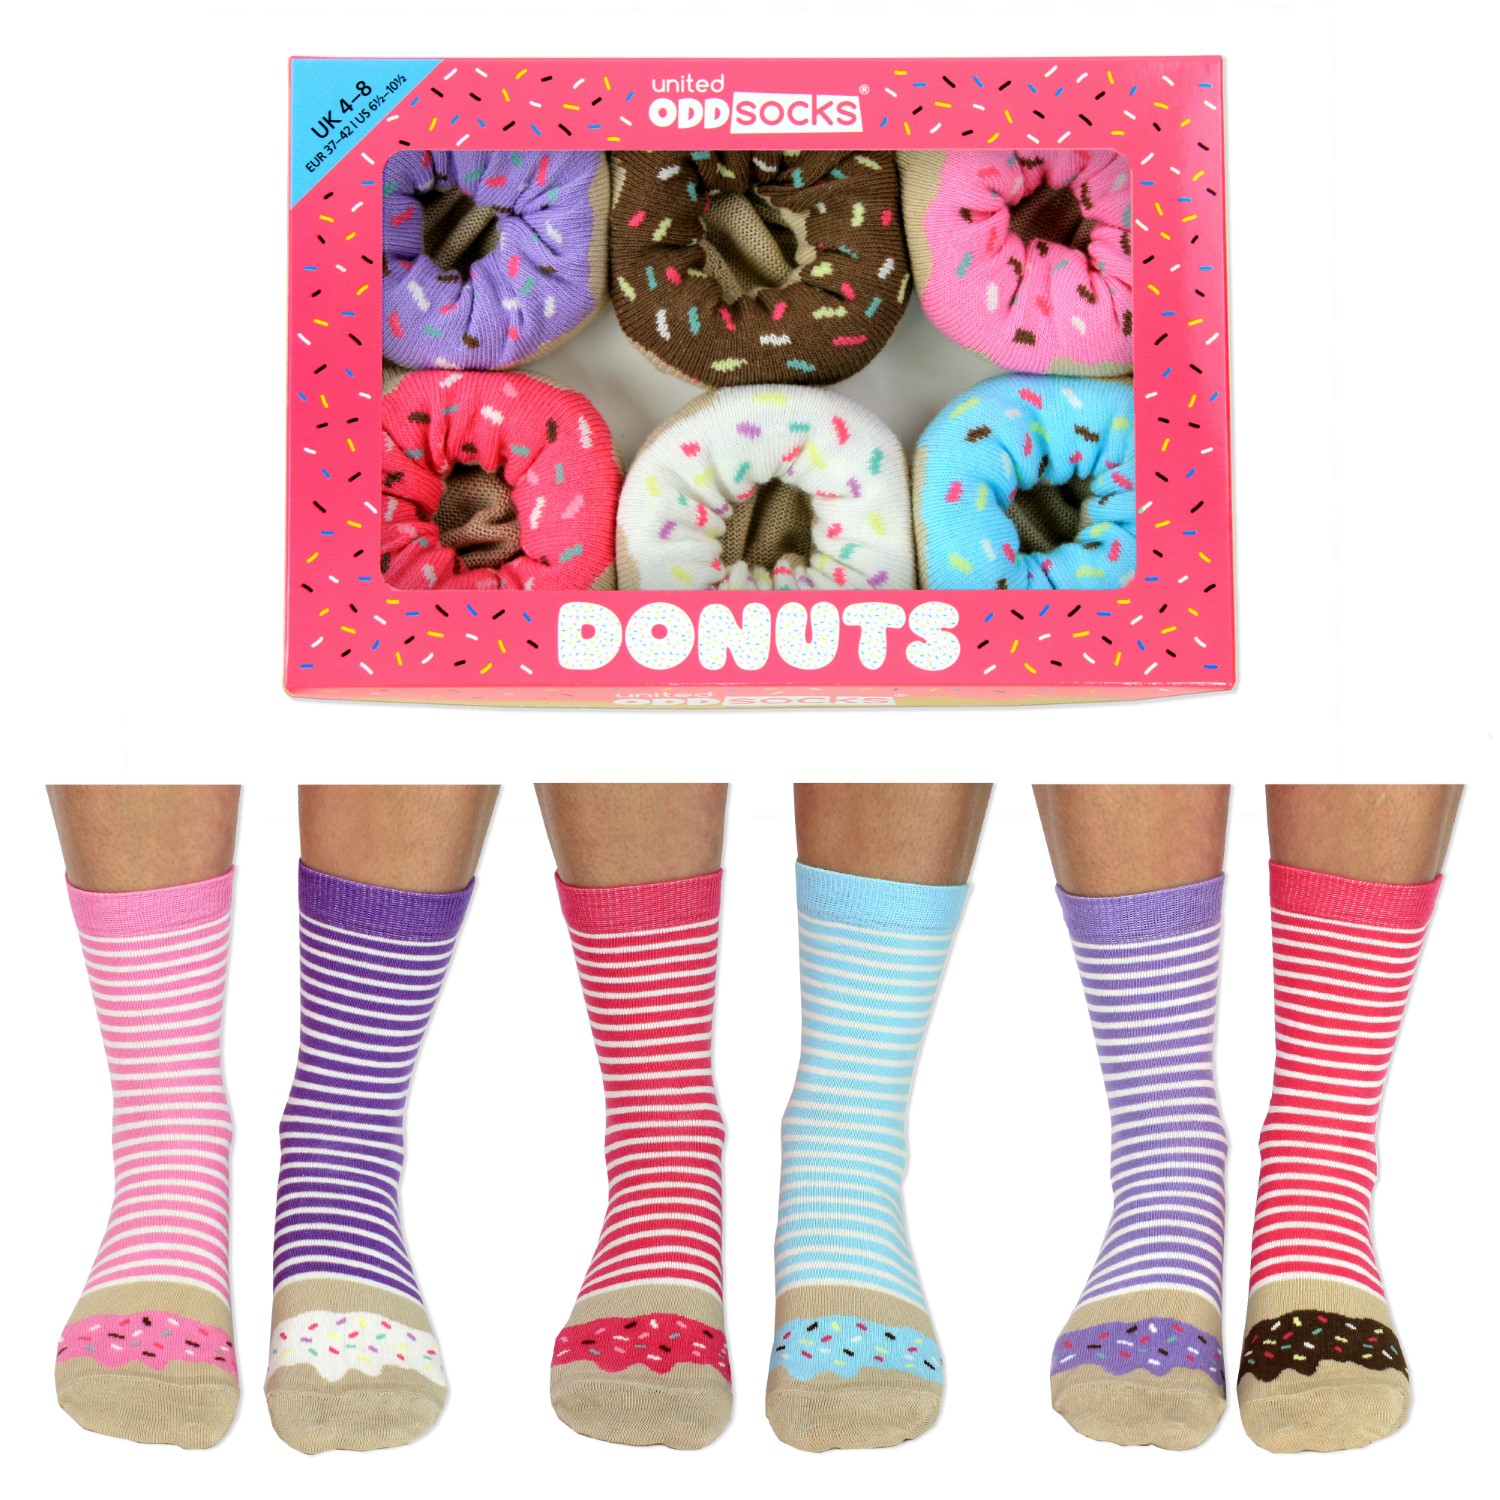 United Oddsocks Donuts Women's Socks Size 4-8 UK (Set of 3 Pairs)